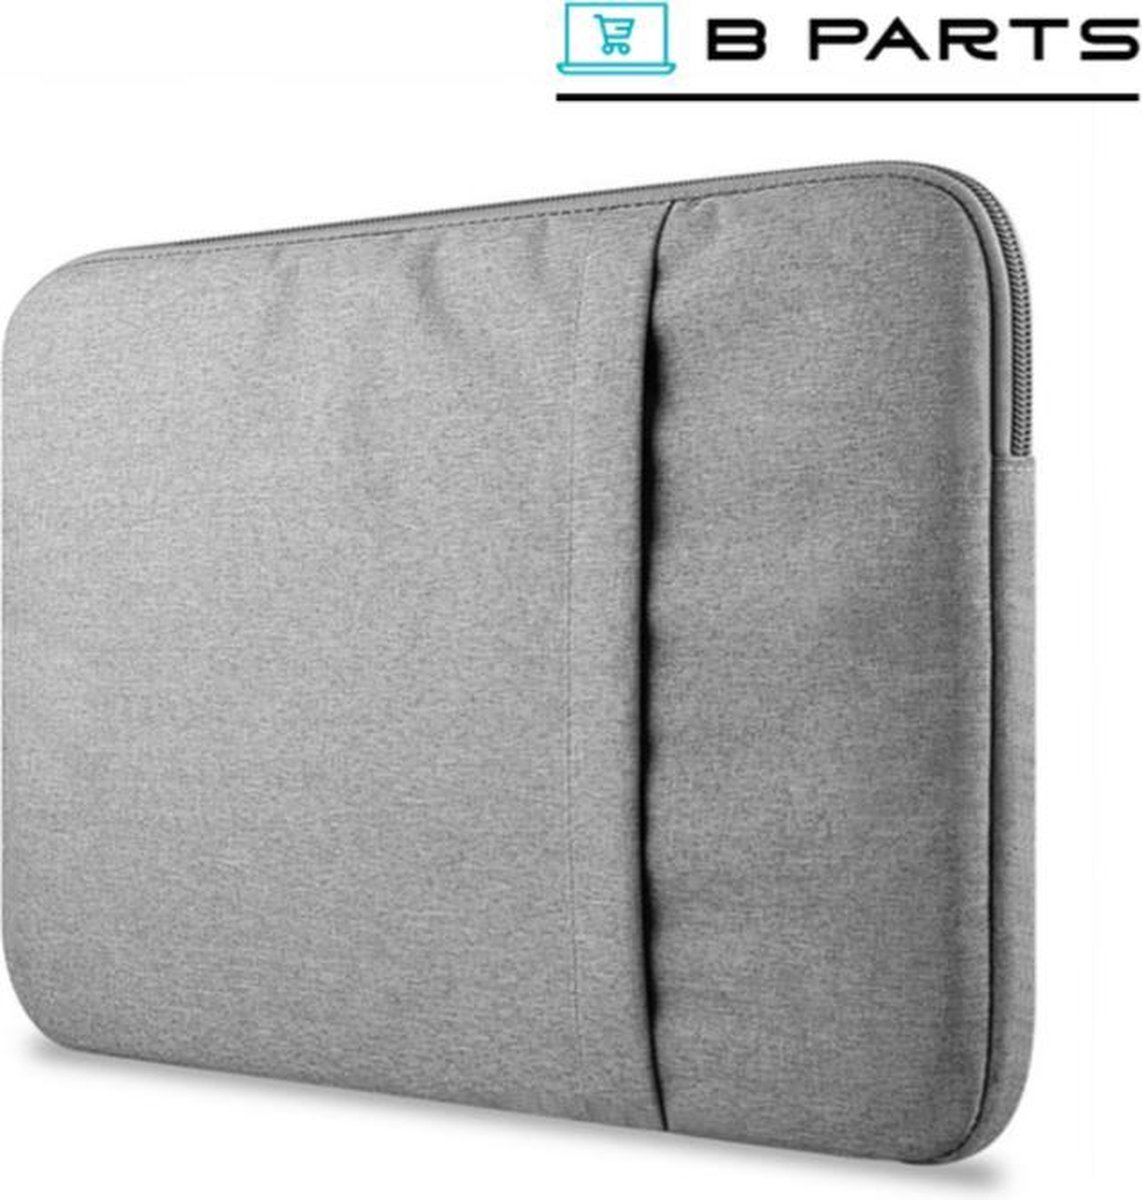 BParts - 13 inch Hoge kwaliteit Laptop sleeve - Beschermhoes laptop - Laptophoes - Extra zachte binnenkant - Lichtgrijs